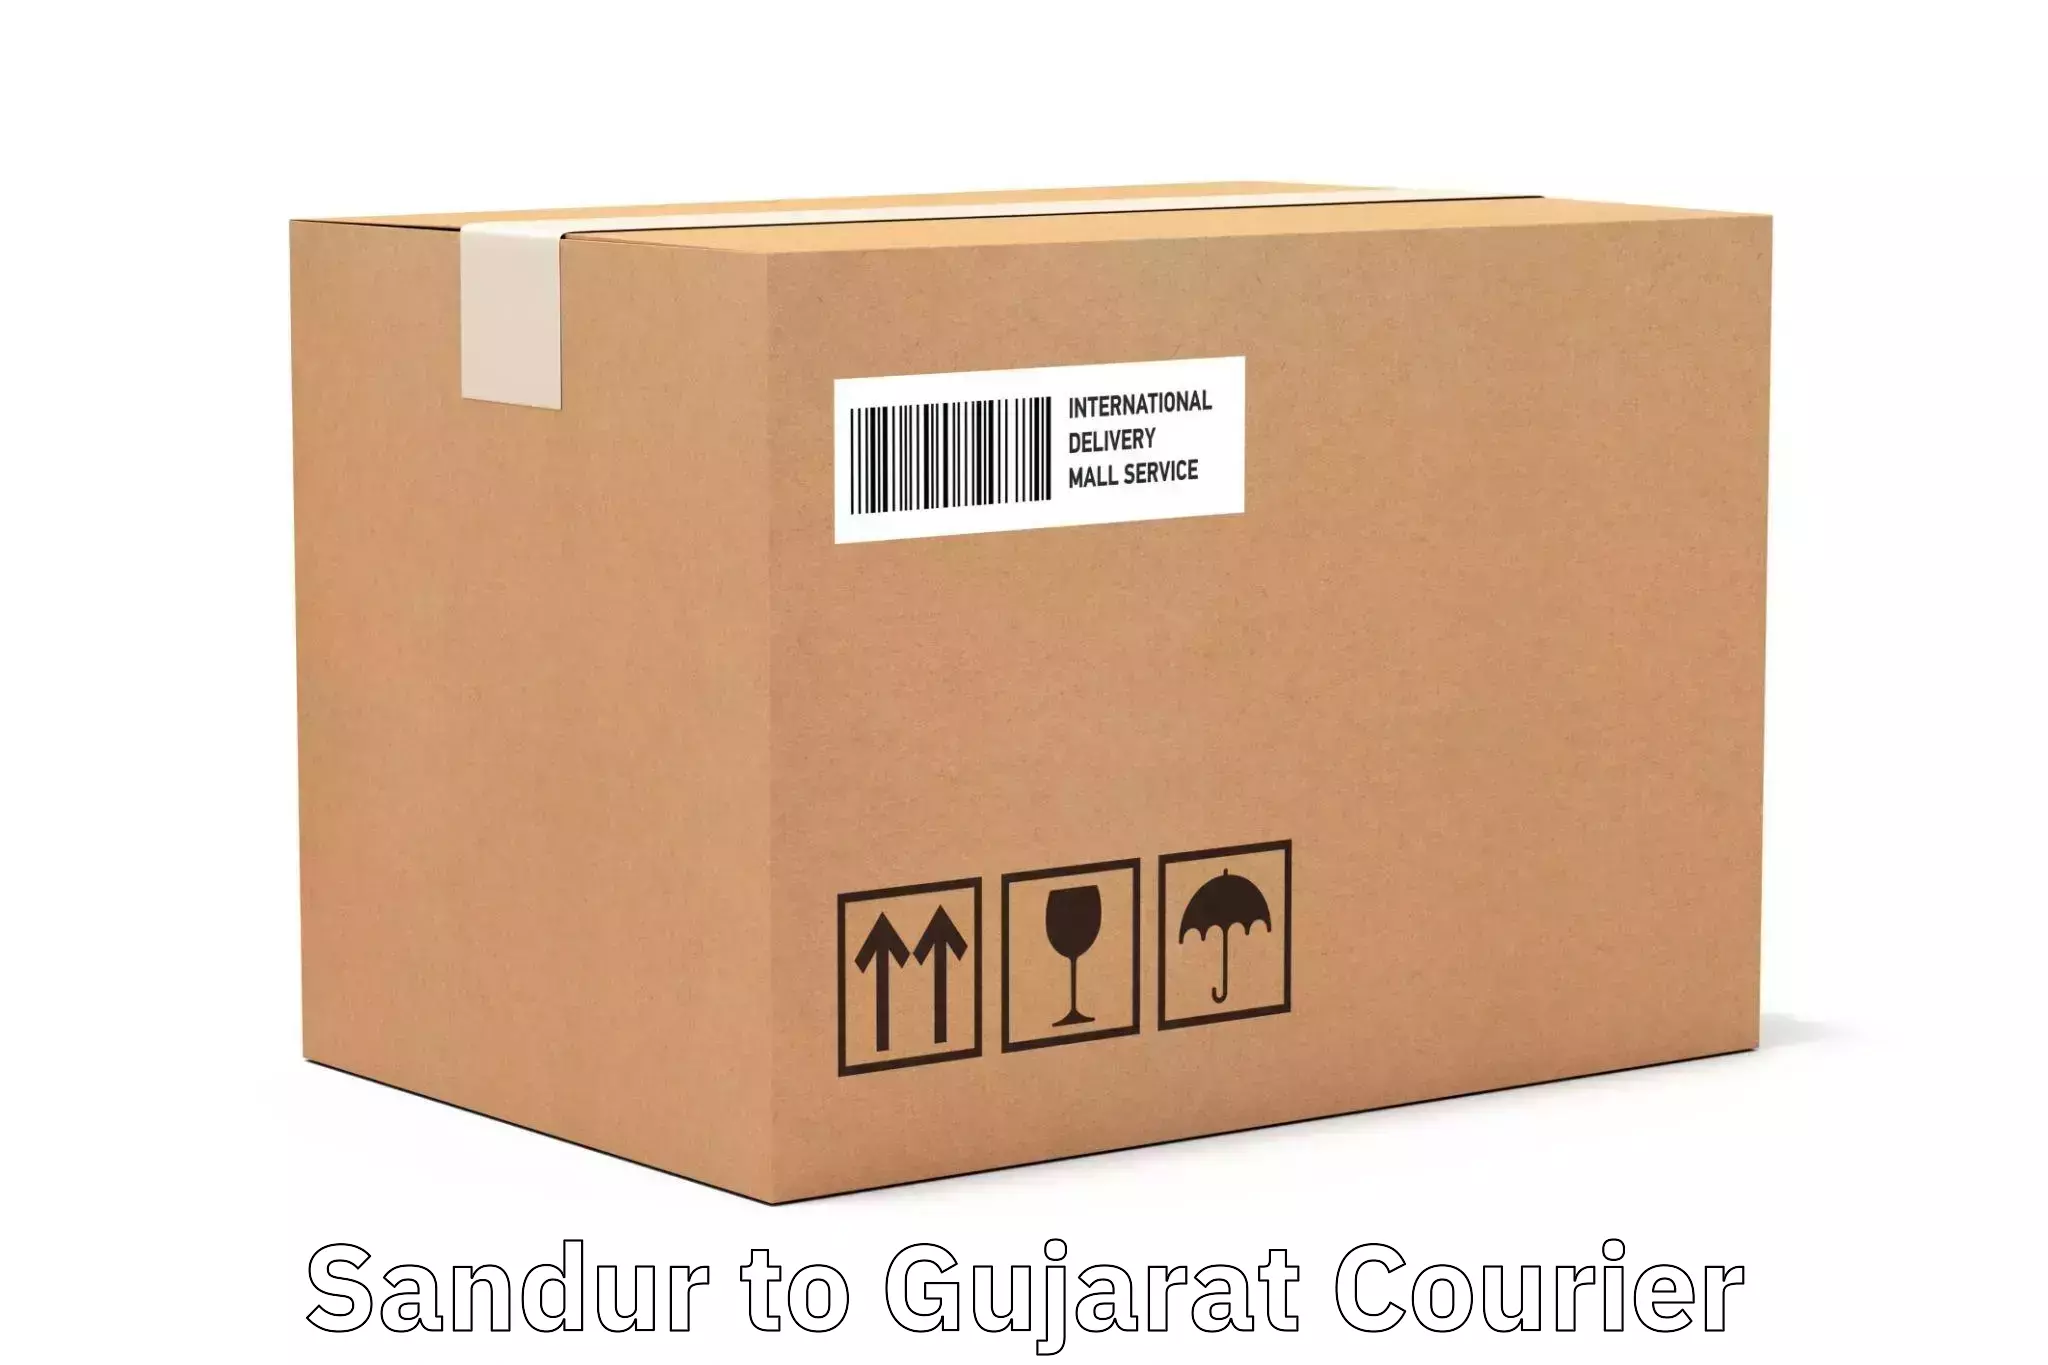 Courier service innovation Sandur to Tapi